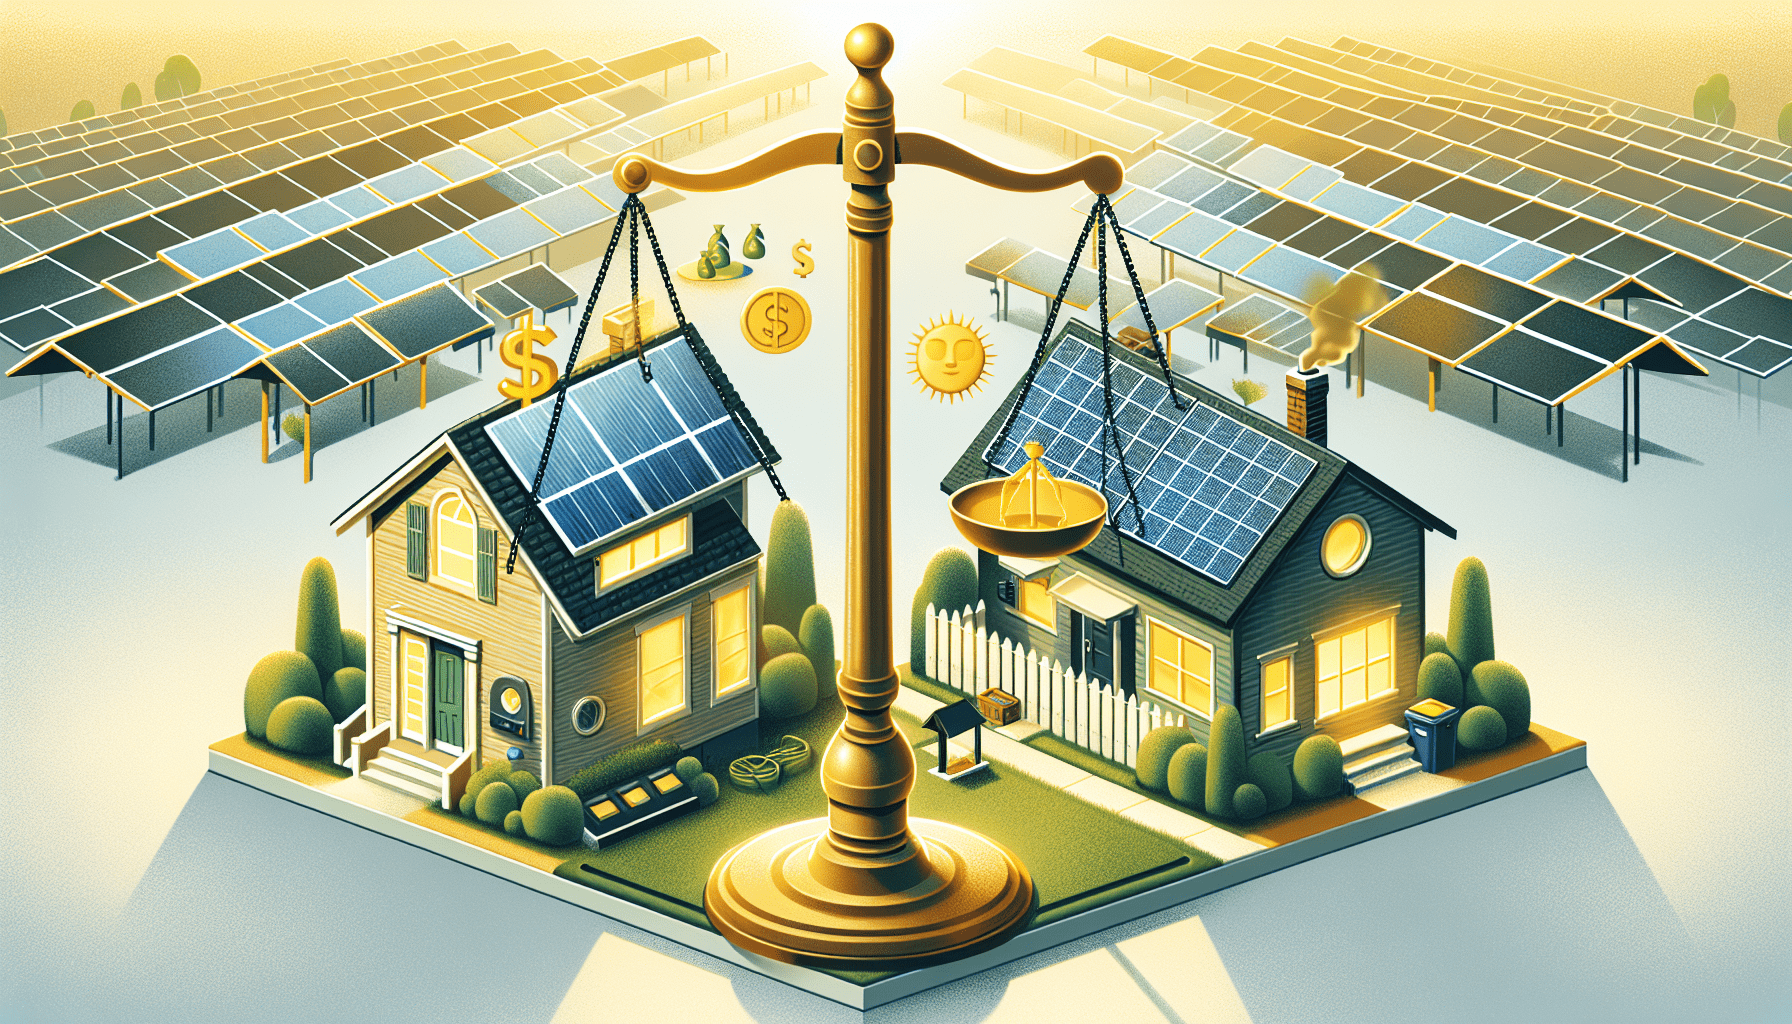 Financial implications of community solar vs rooftop solar panels